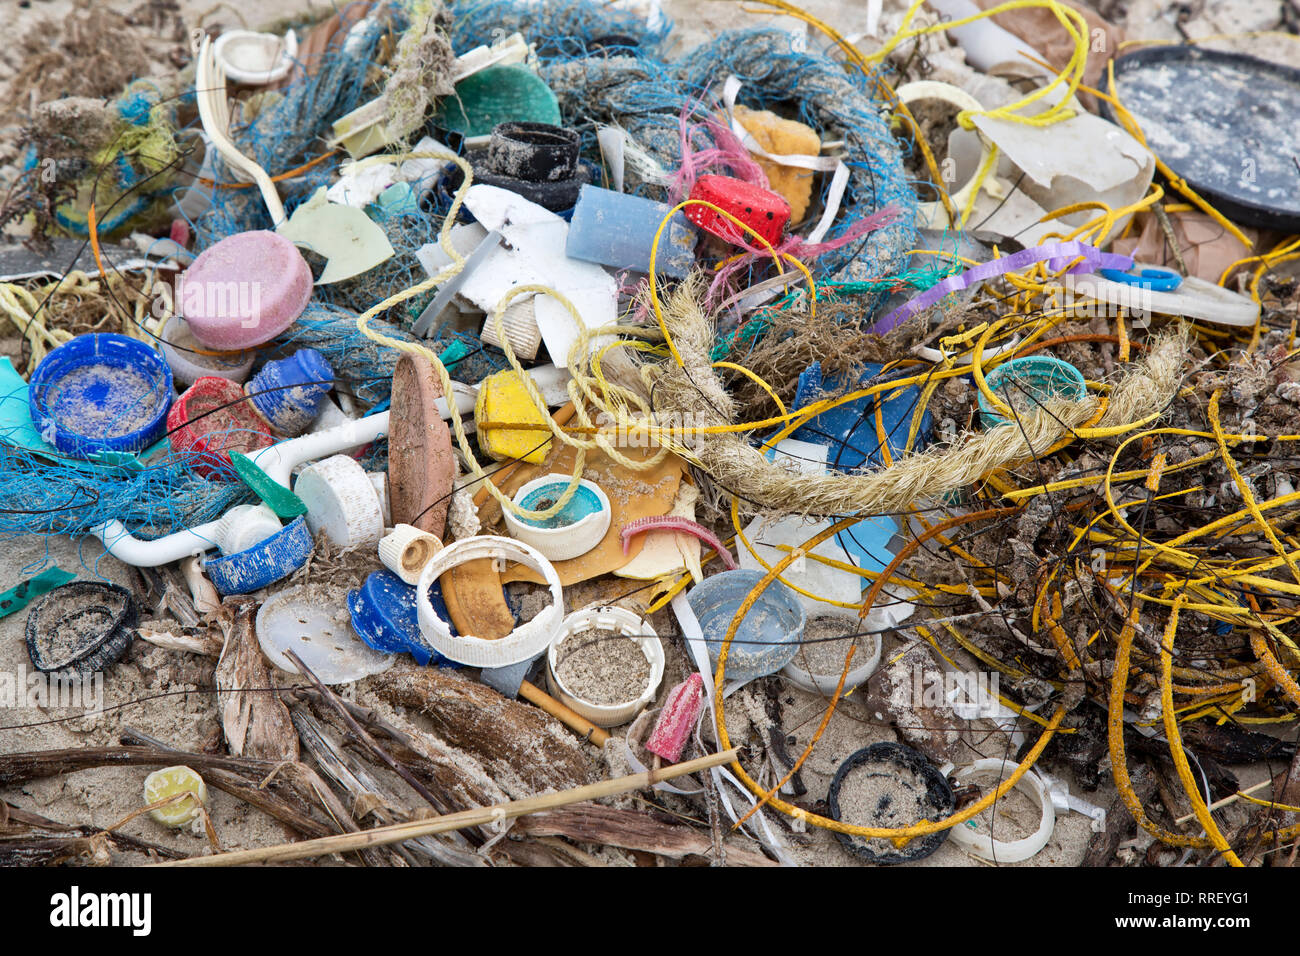 Trash collected on coastal beach. Stock Photo